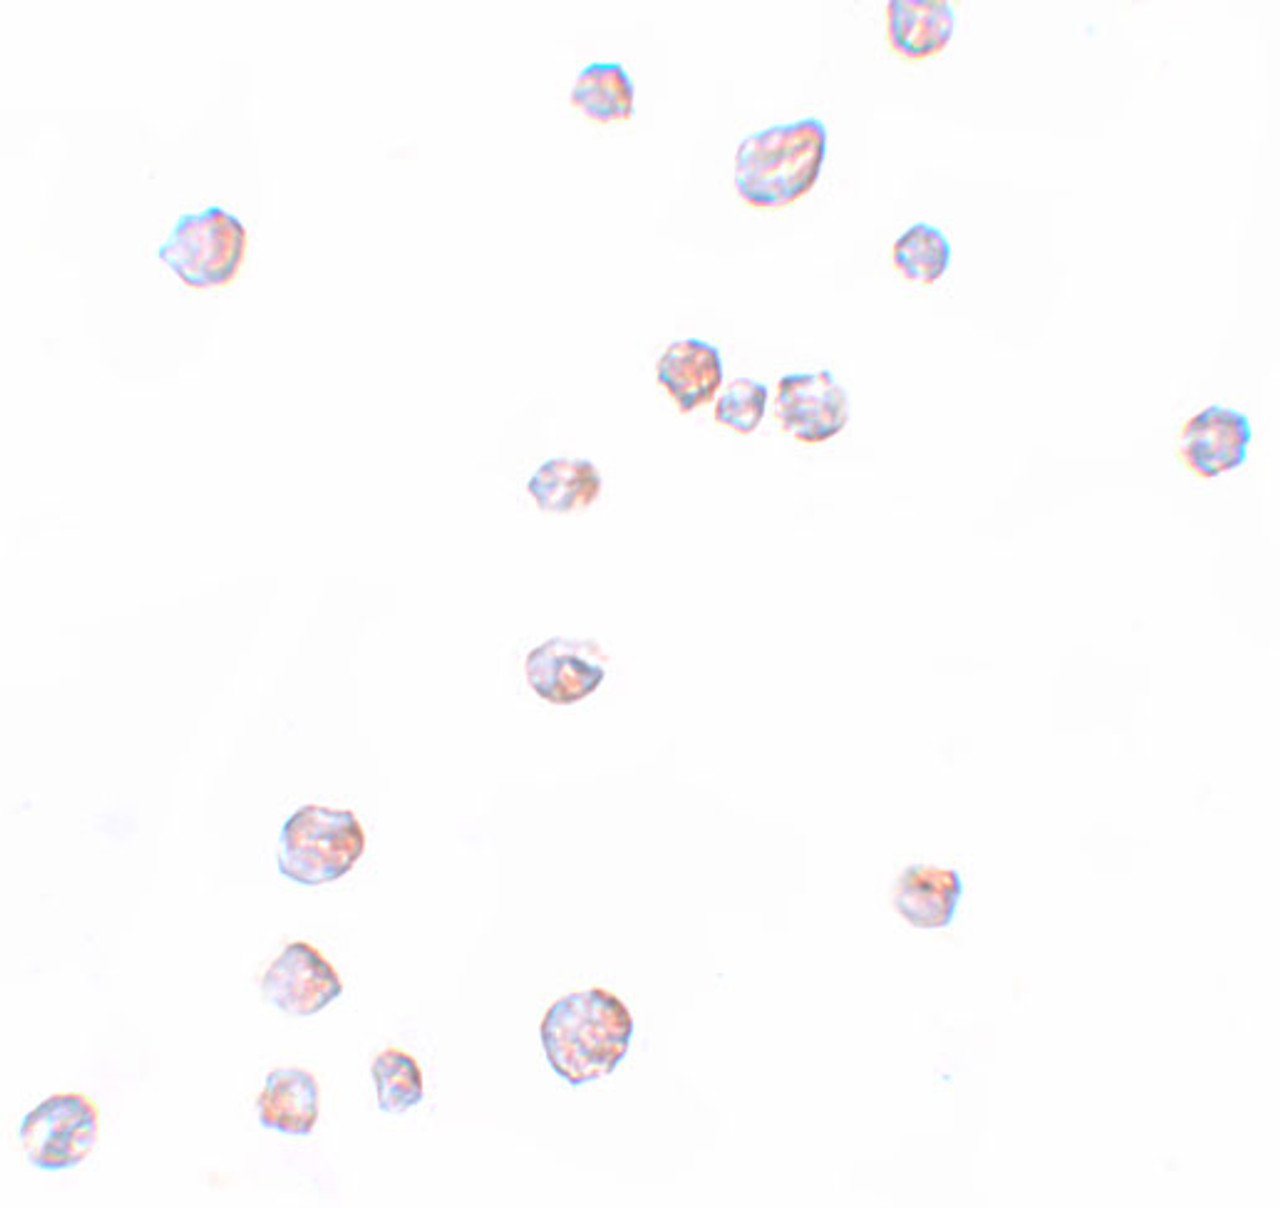 Immunocytochemistry of CHORDC1 in 293 cells with CHORDC1 antibody at 2.5 ug/mL.